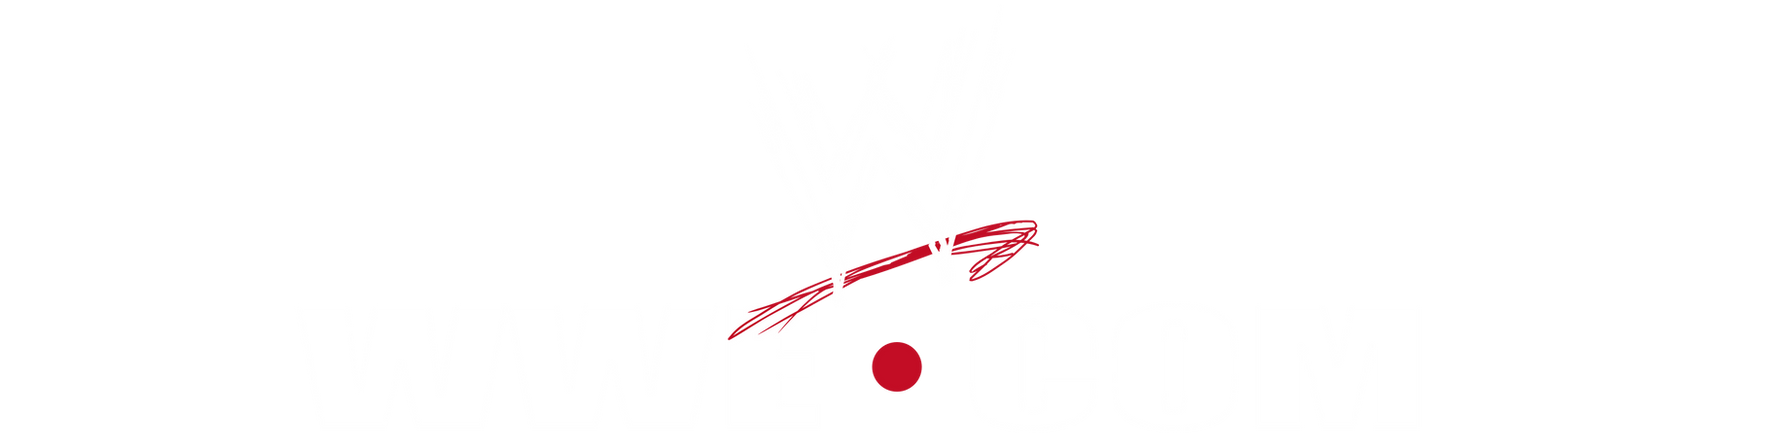 WWE.com apron by EnternityofDude52 on DeviantArt